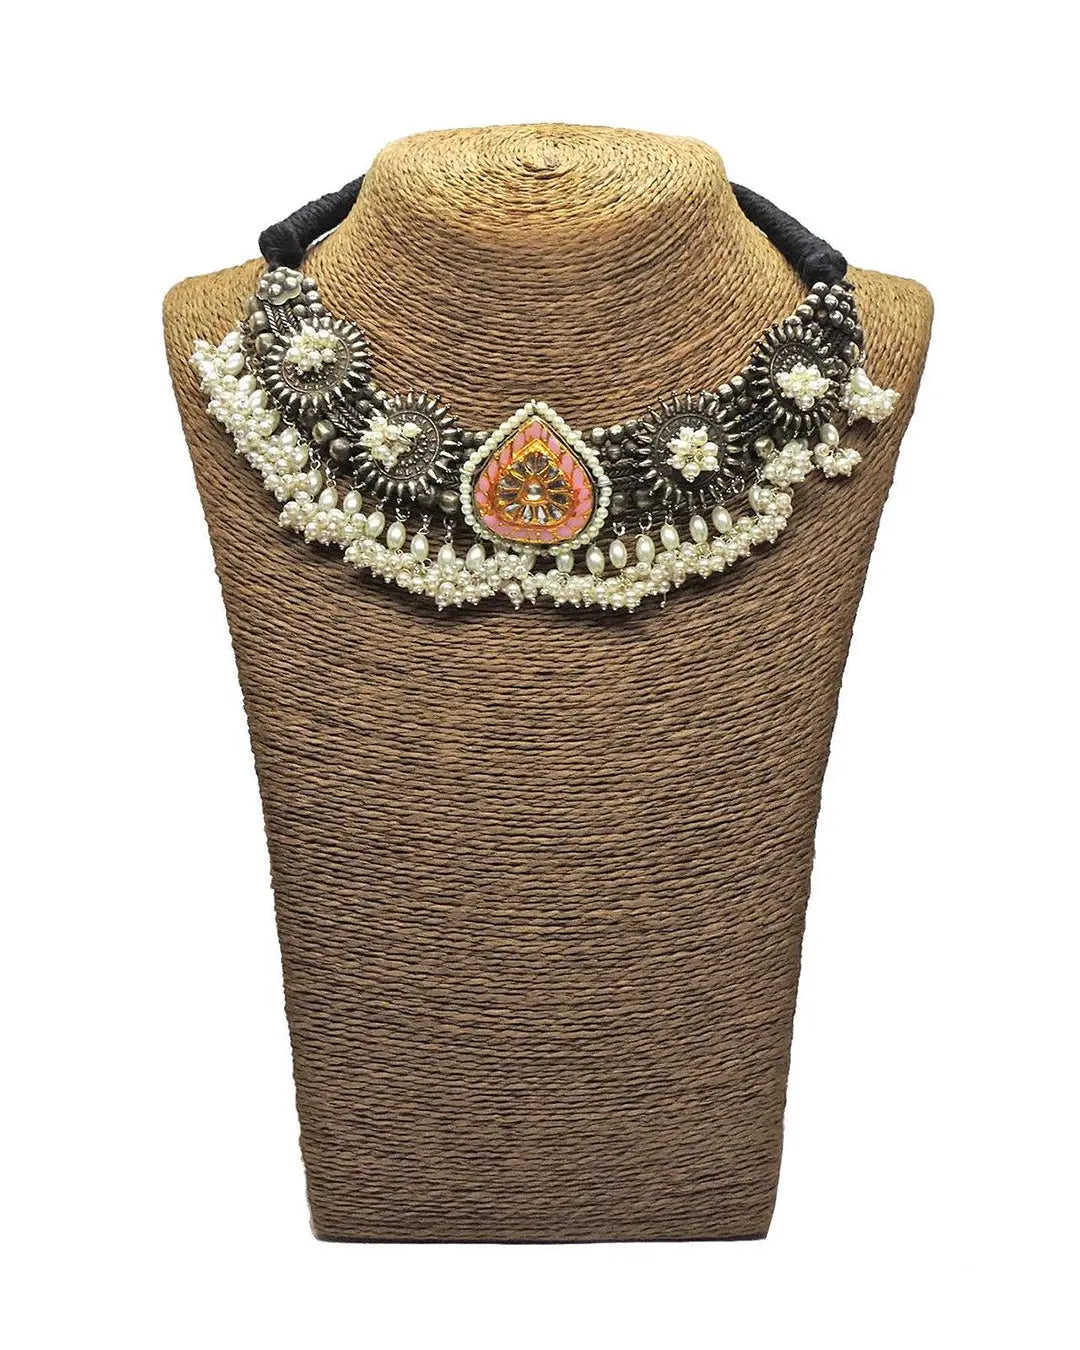 Ashru Choker- Handcrafted Jewellery from Dori